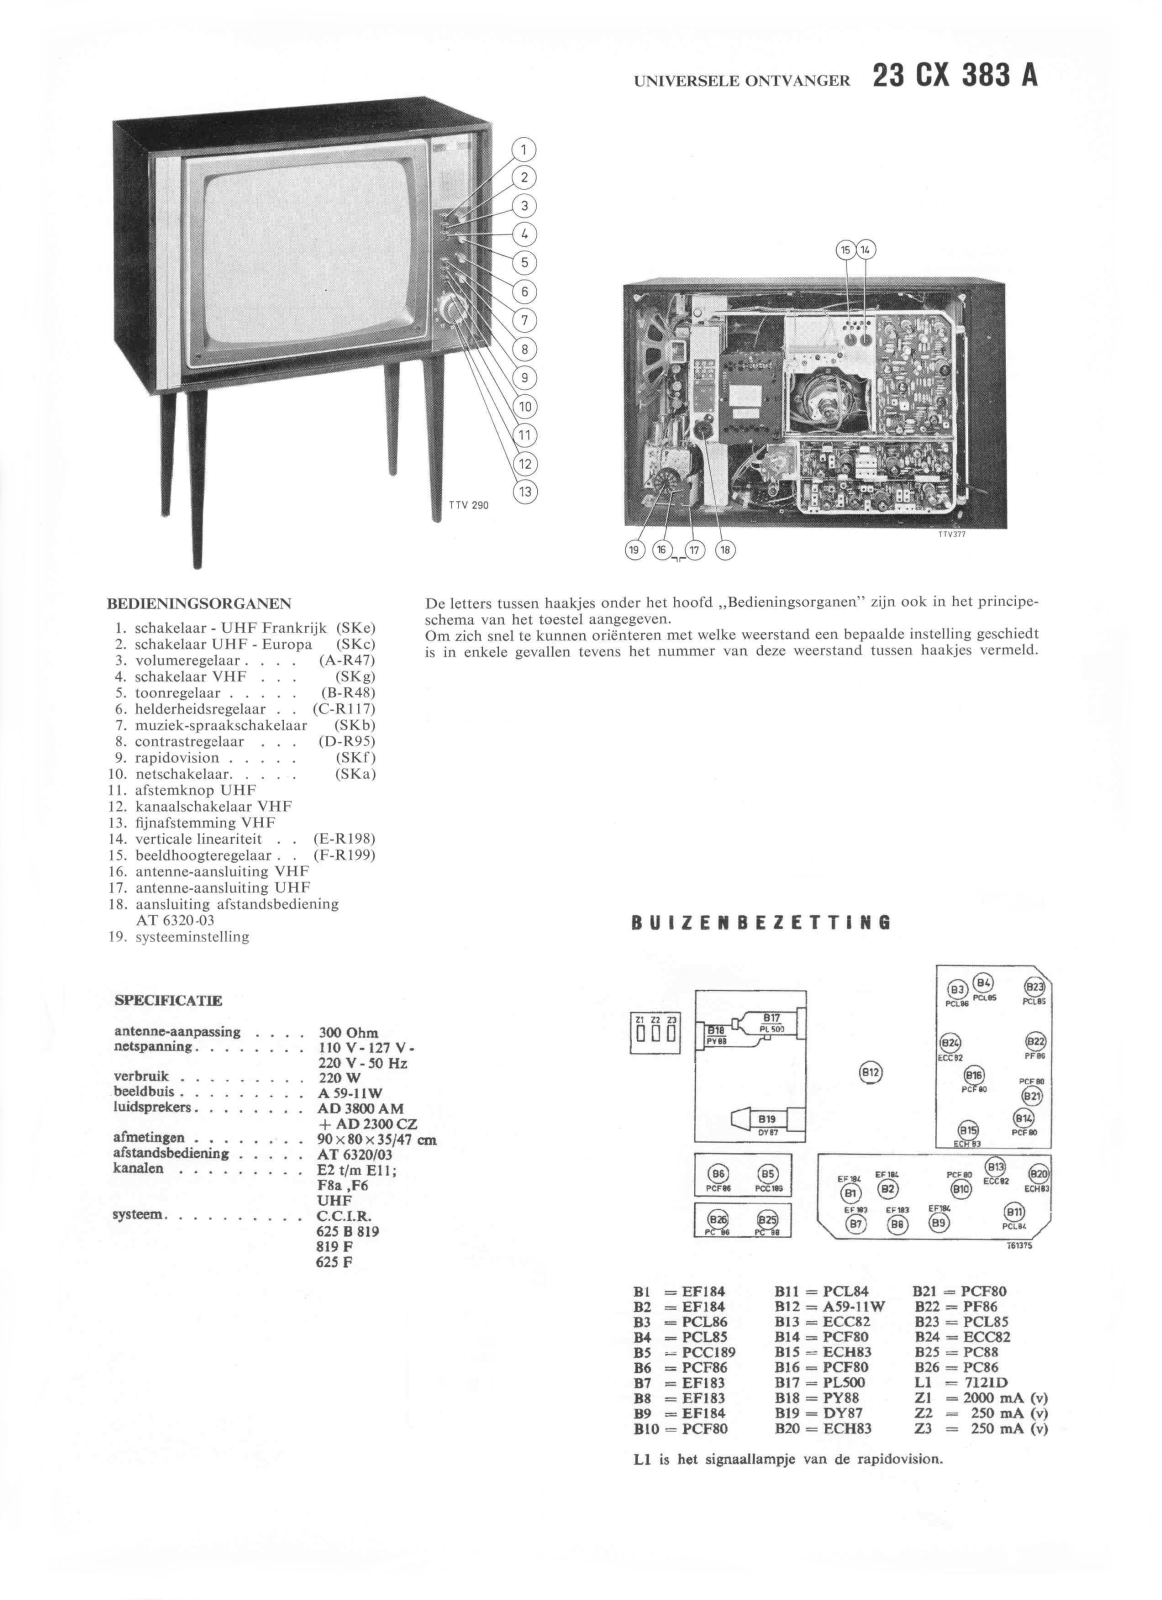 Philips 23CX383A Schematic